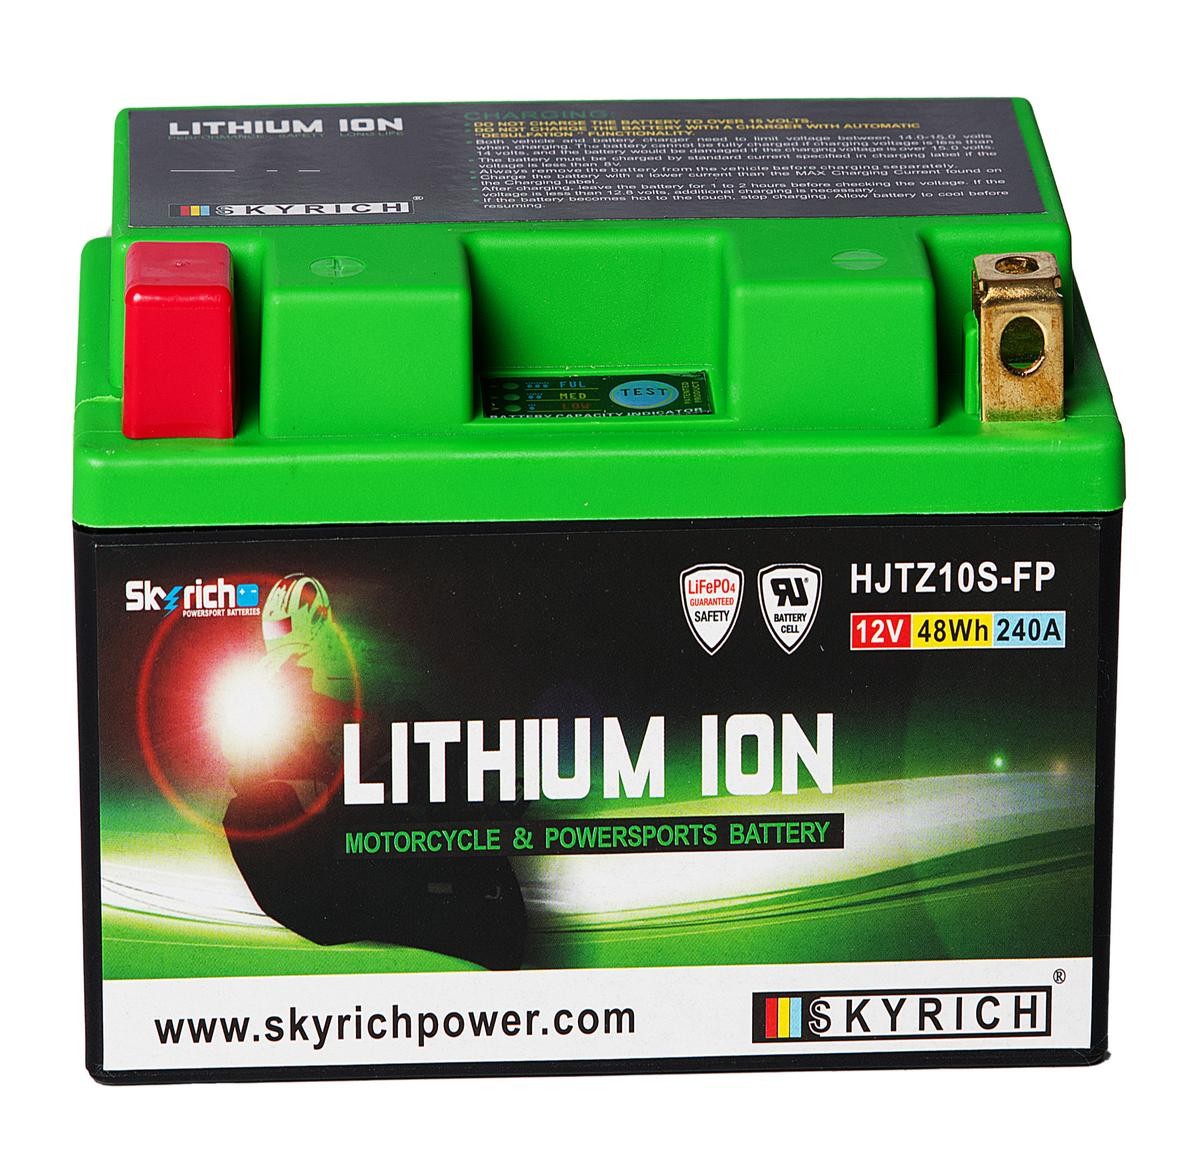 HUSQVARNA 701 Batterie 12V 4Ah 240A N Li-Ionen-Batterie SKYRICH LITHIUM ION HJTZ10S-FP